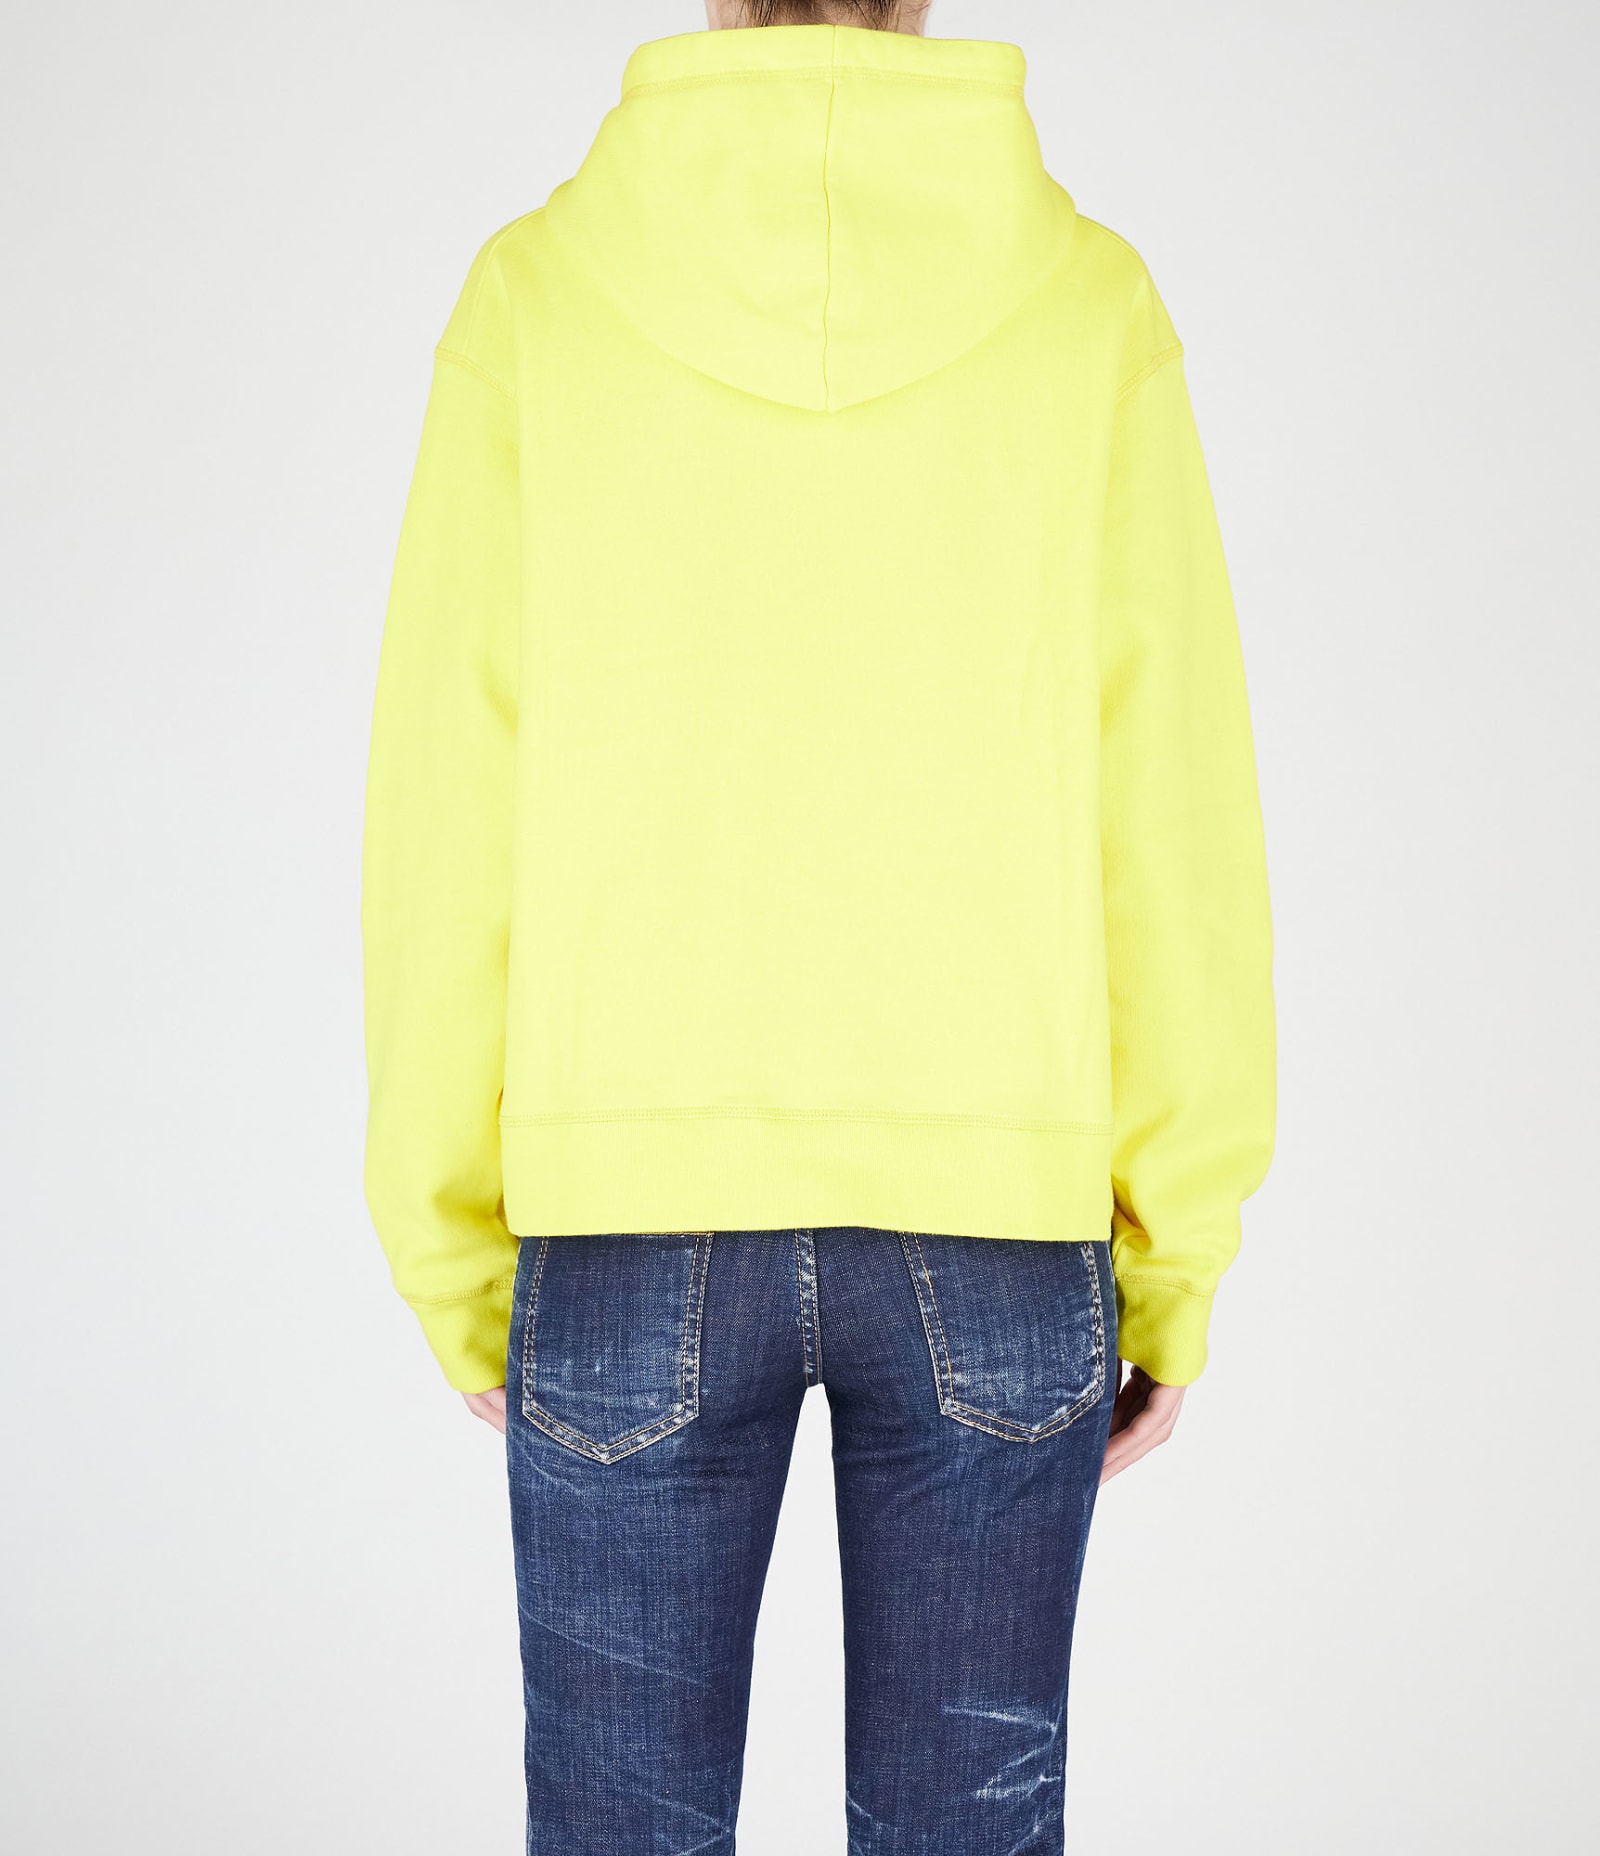 Shop Dsquared2 Sweatshirt In Yellow